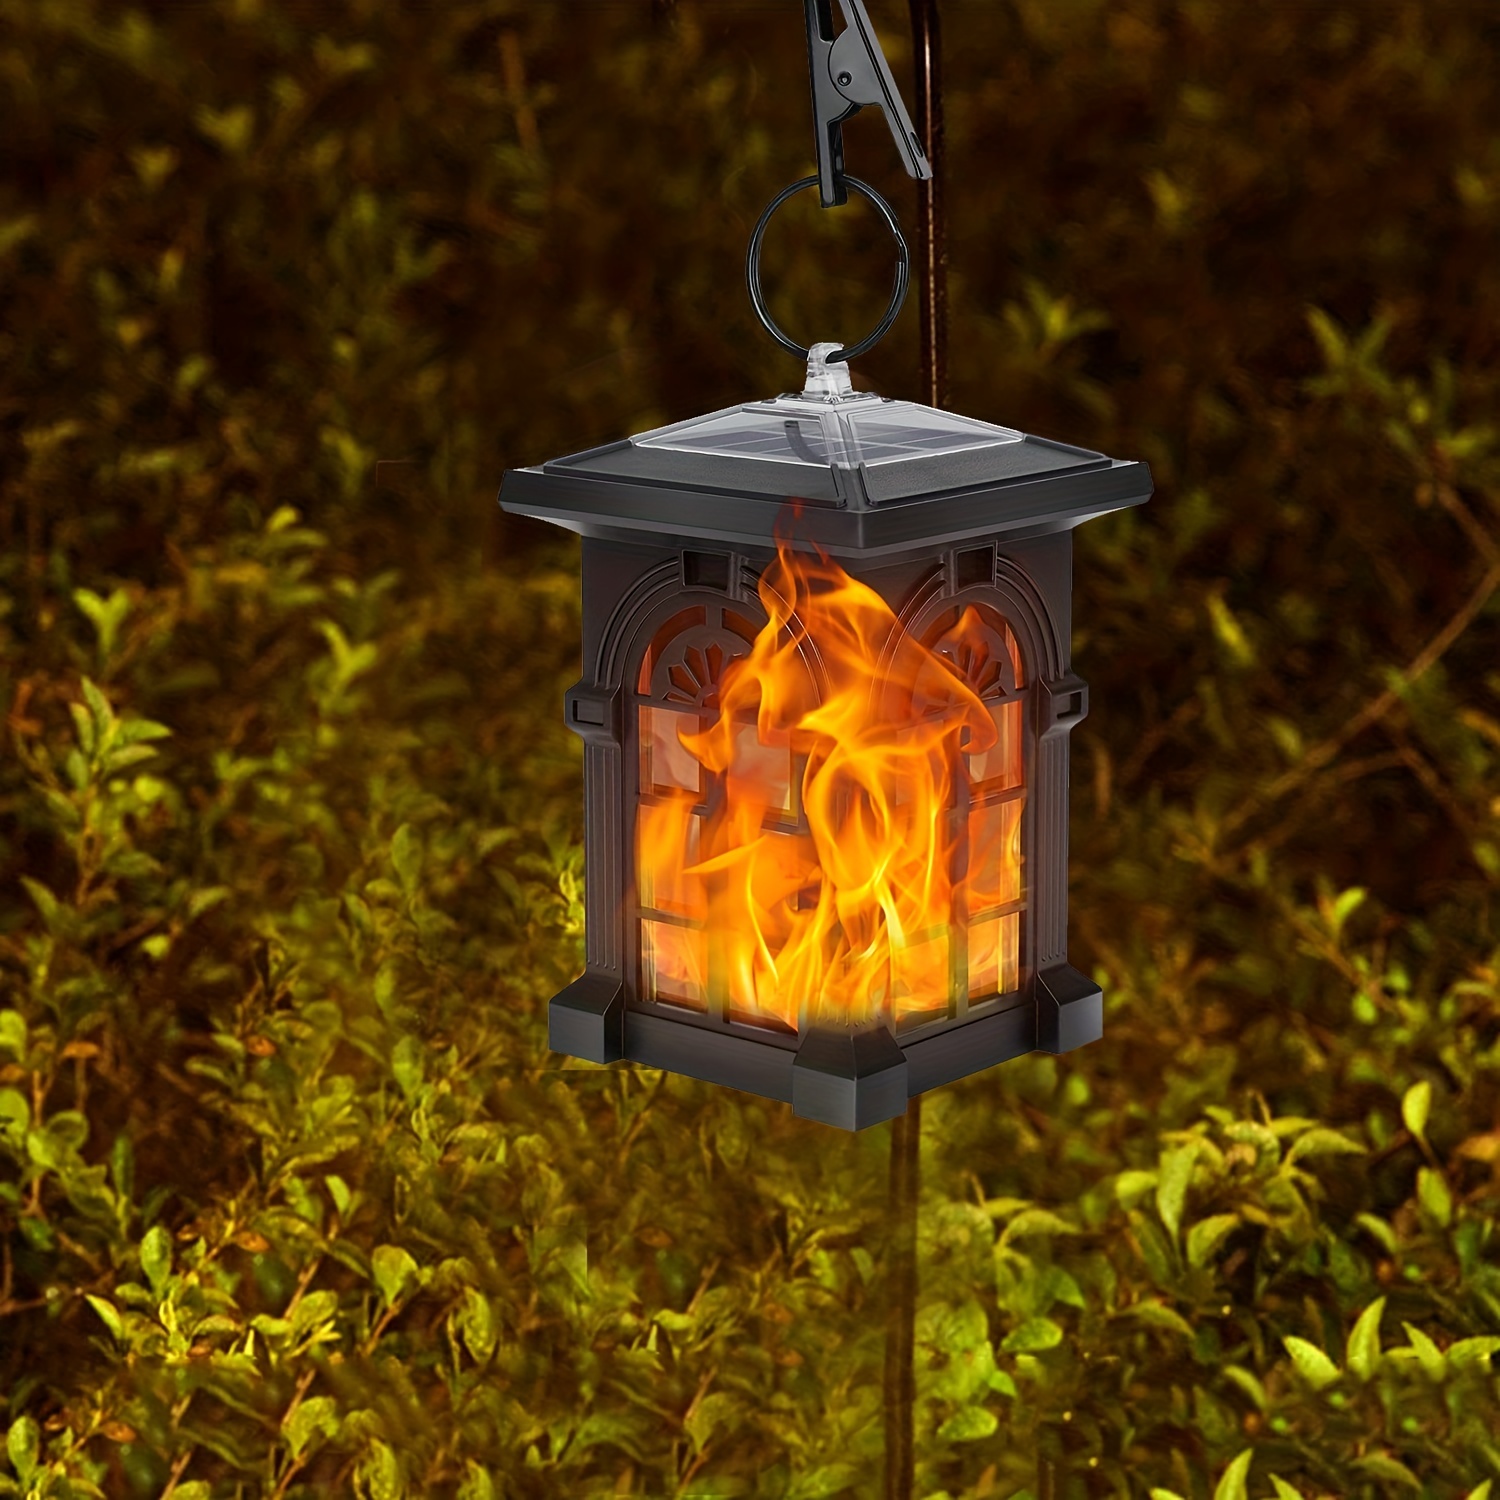 Hanging Clip Solar Powered LED Light Bulbs Warm Outdoor Garden Camping Lamp